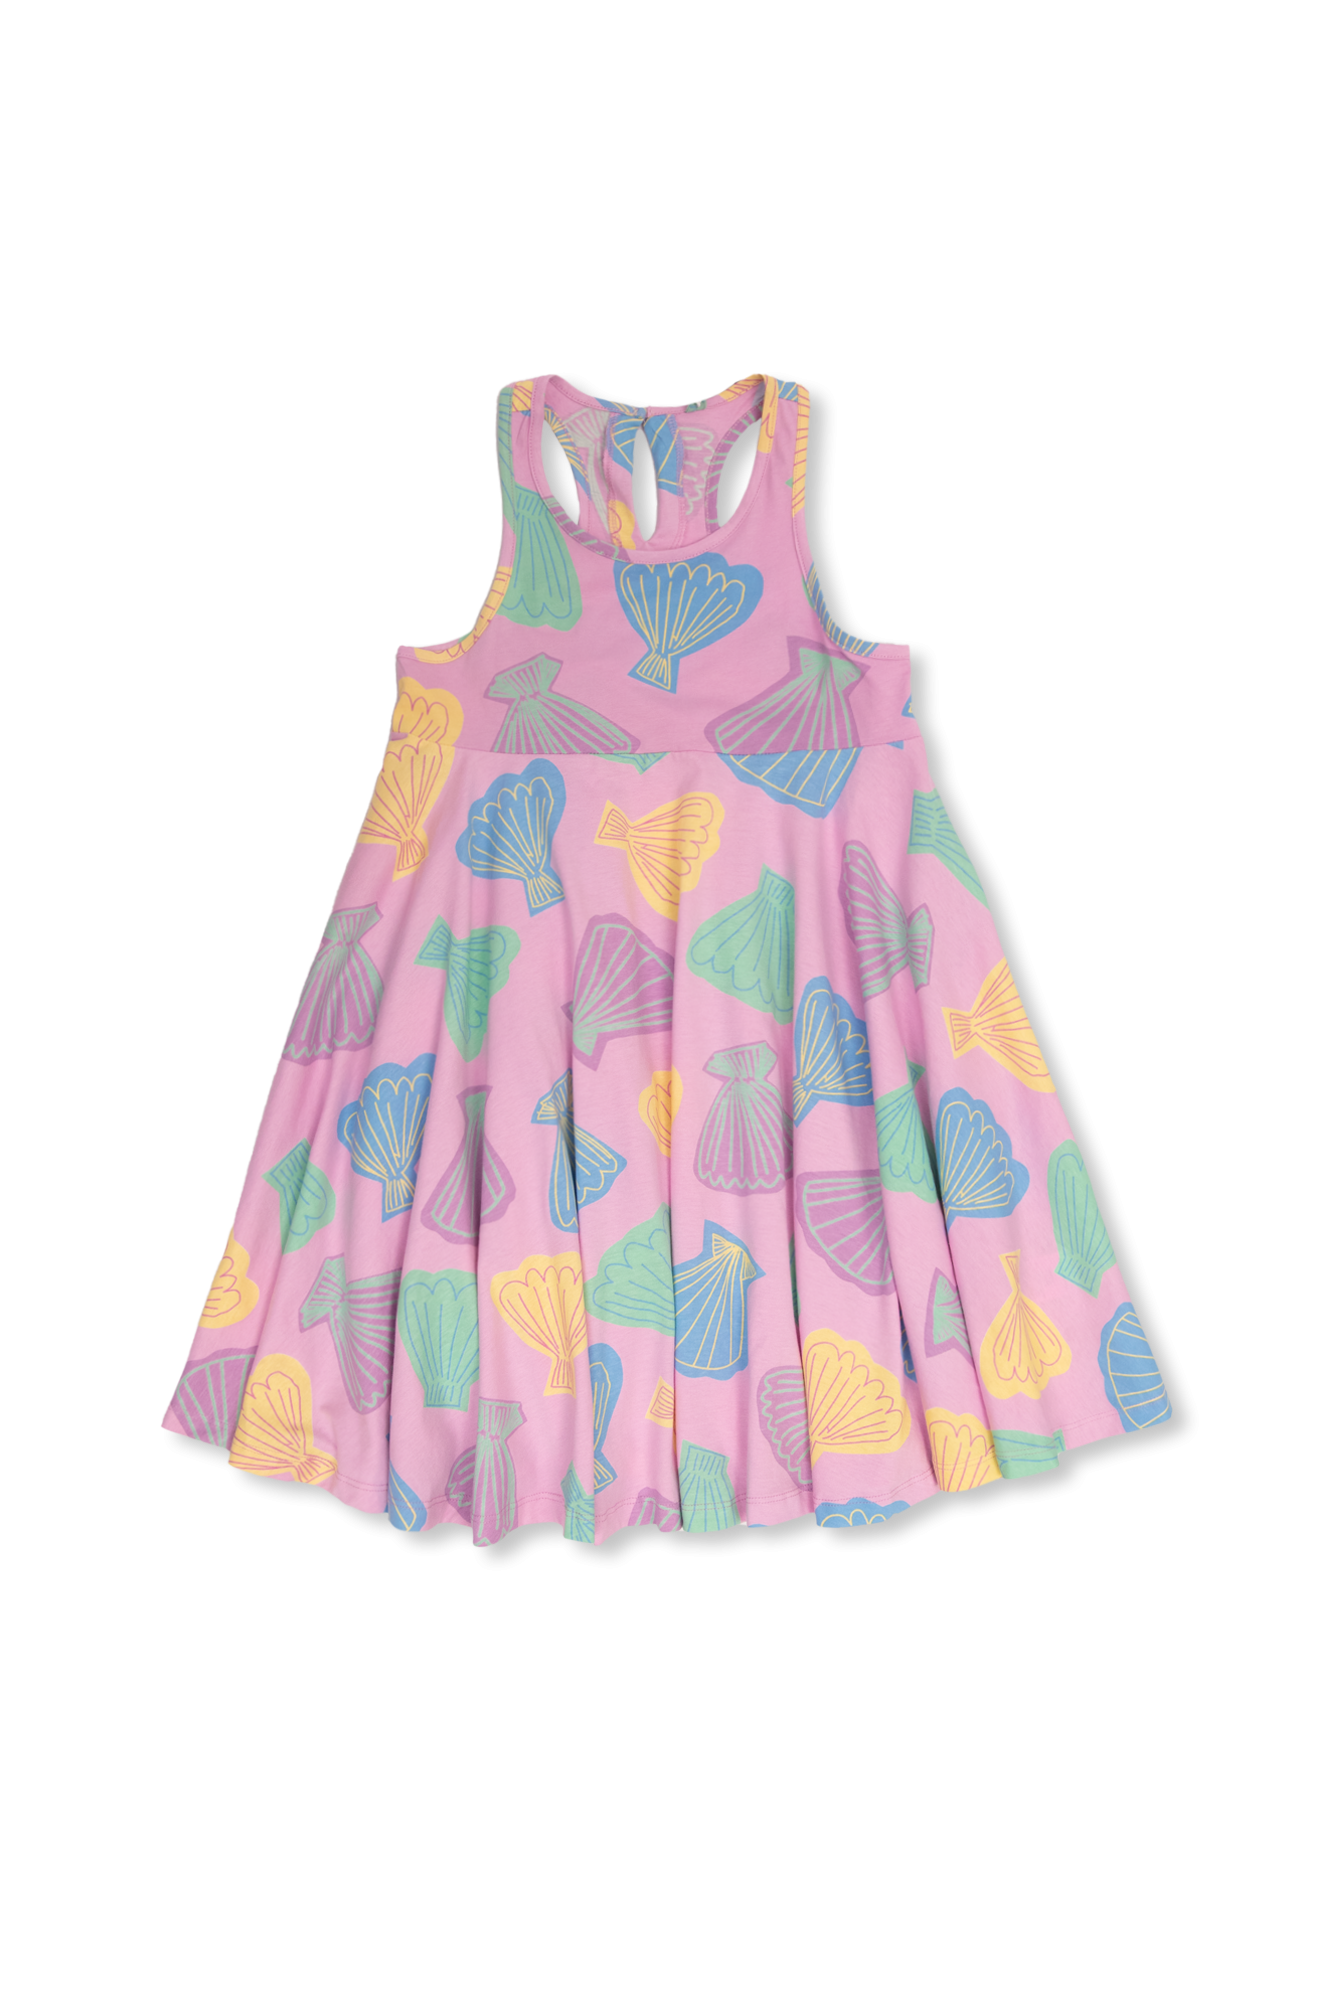 Stella McCartney Kids Patterned dress